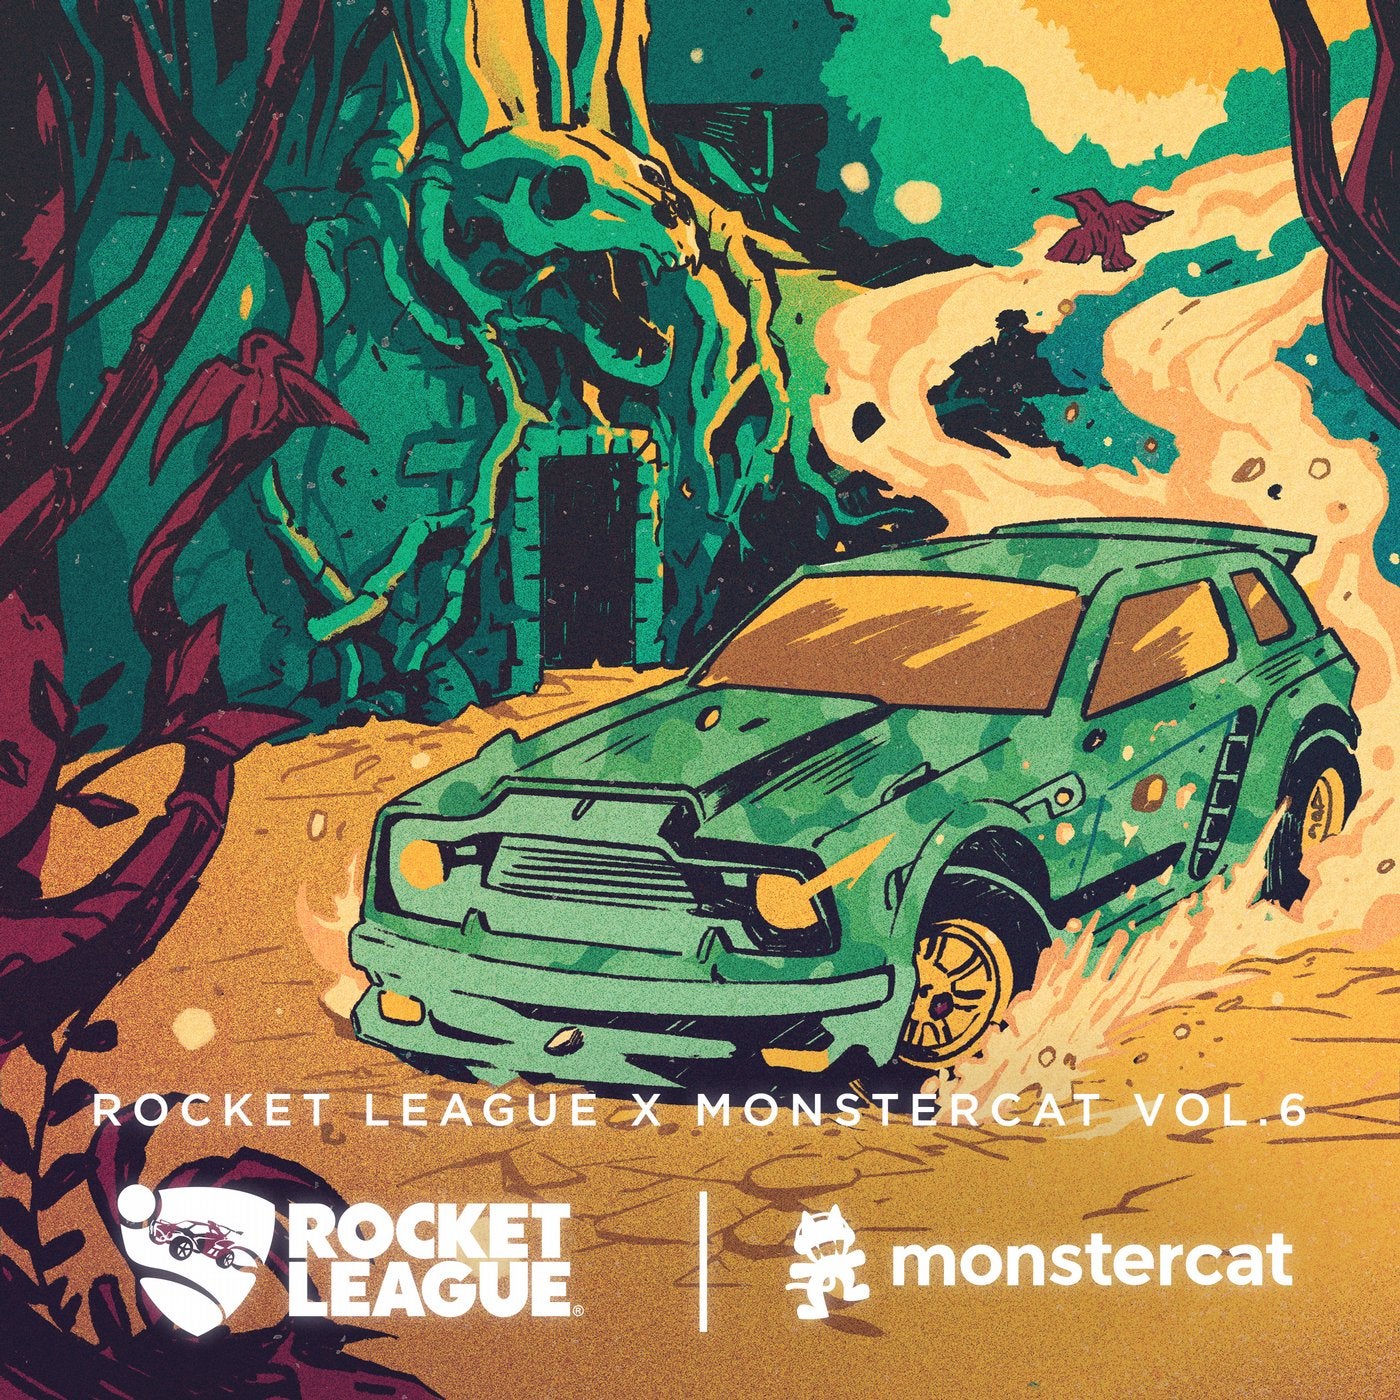 Rocket League x Monstercat Vol. 6